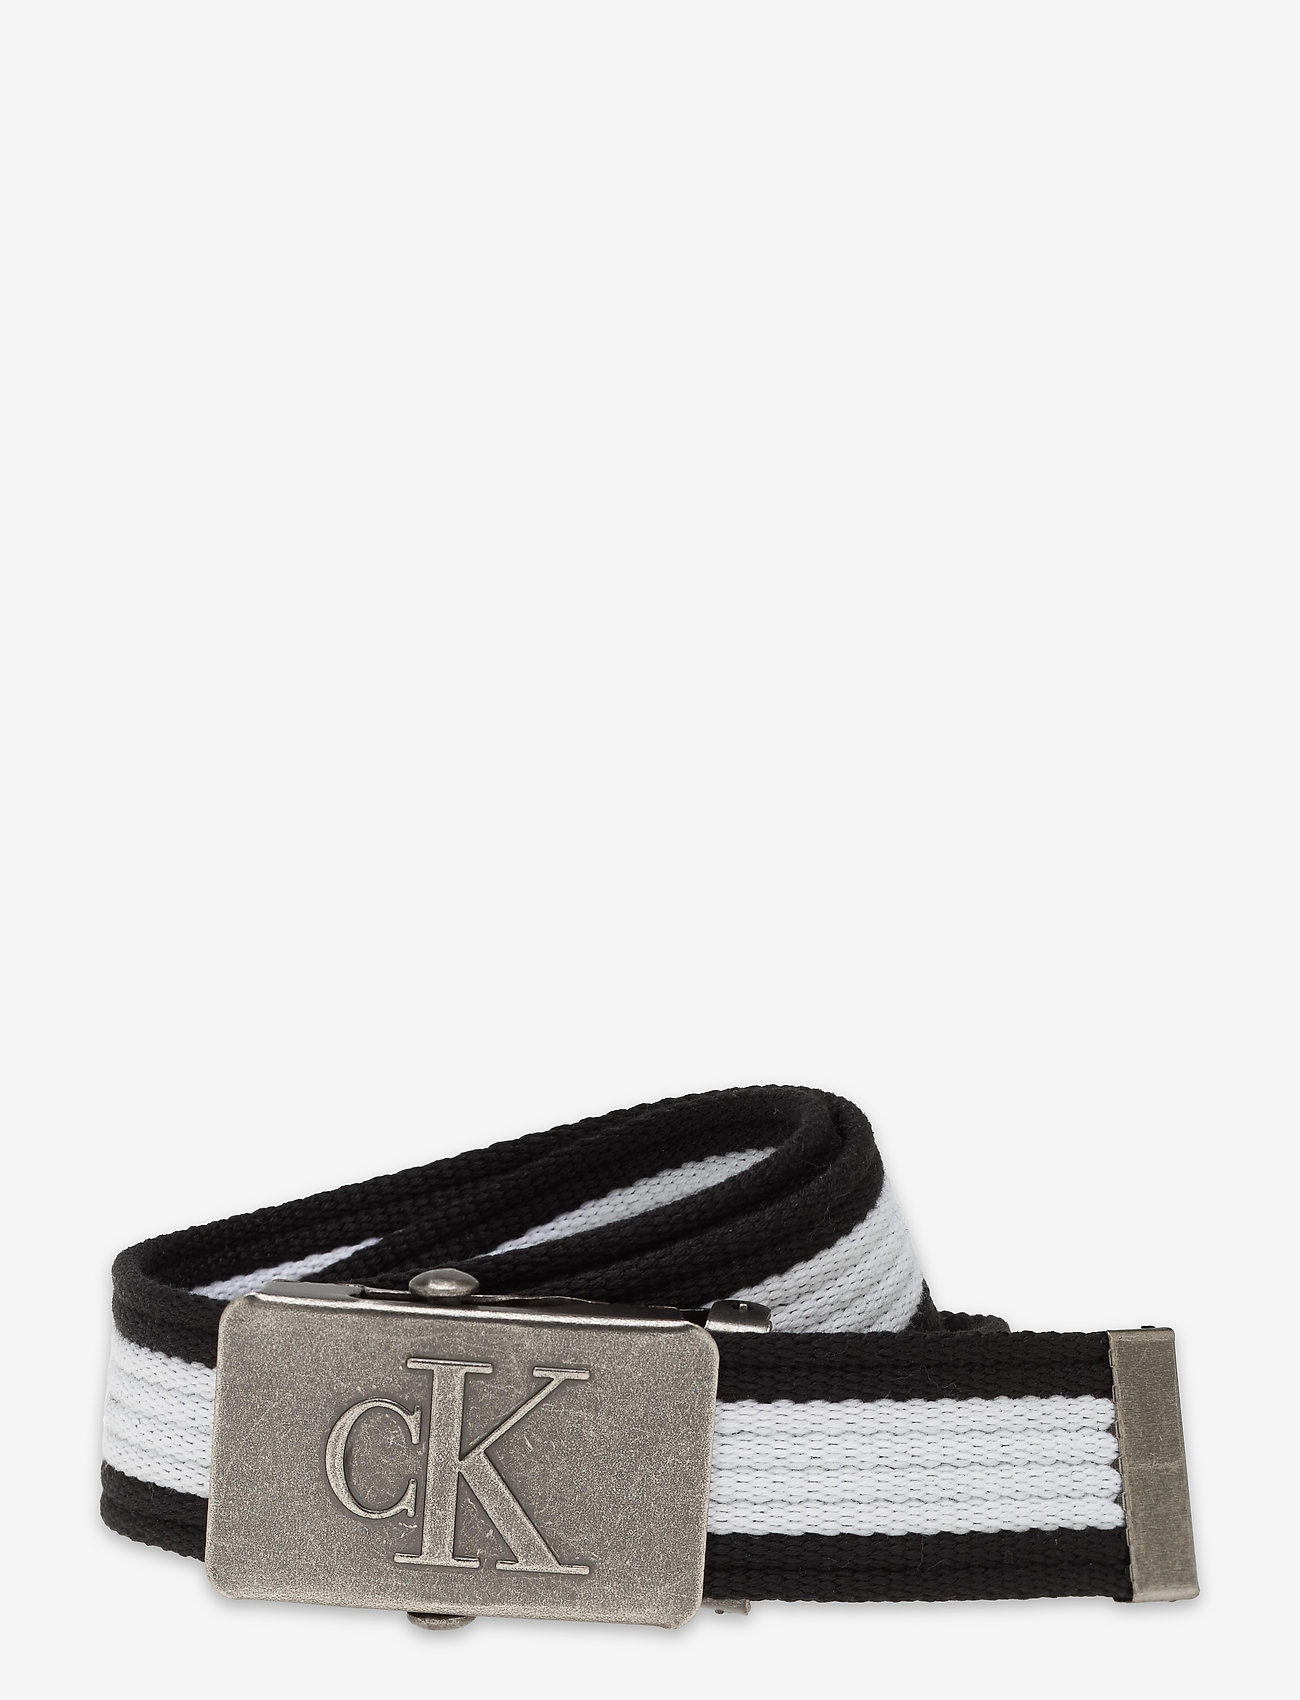 leather ck buckle belt